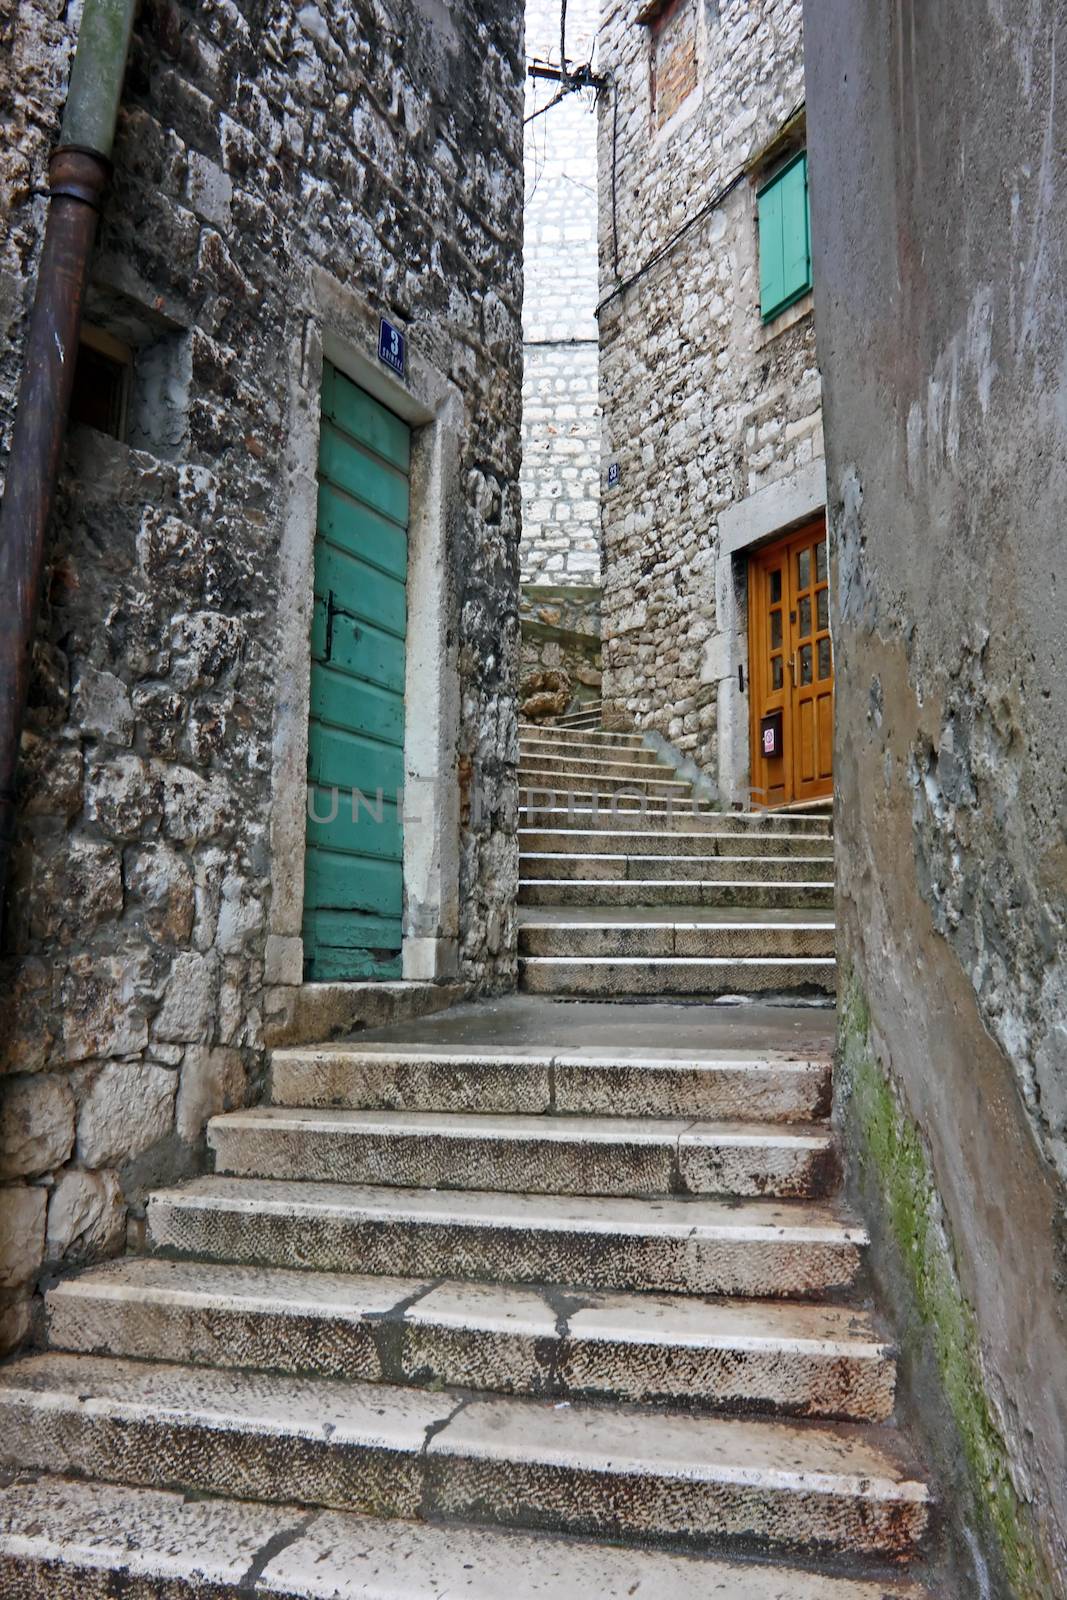 Narrow alley in Sibenik. Sibenik is historic old town on the Adriatic coast of Croatia